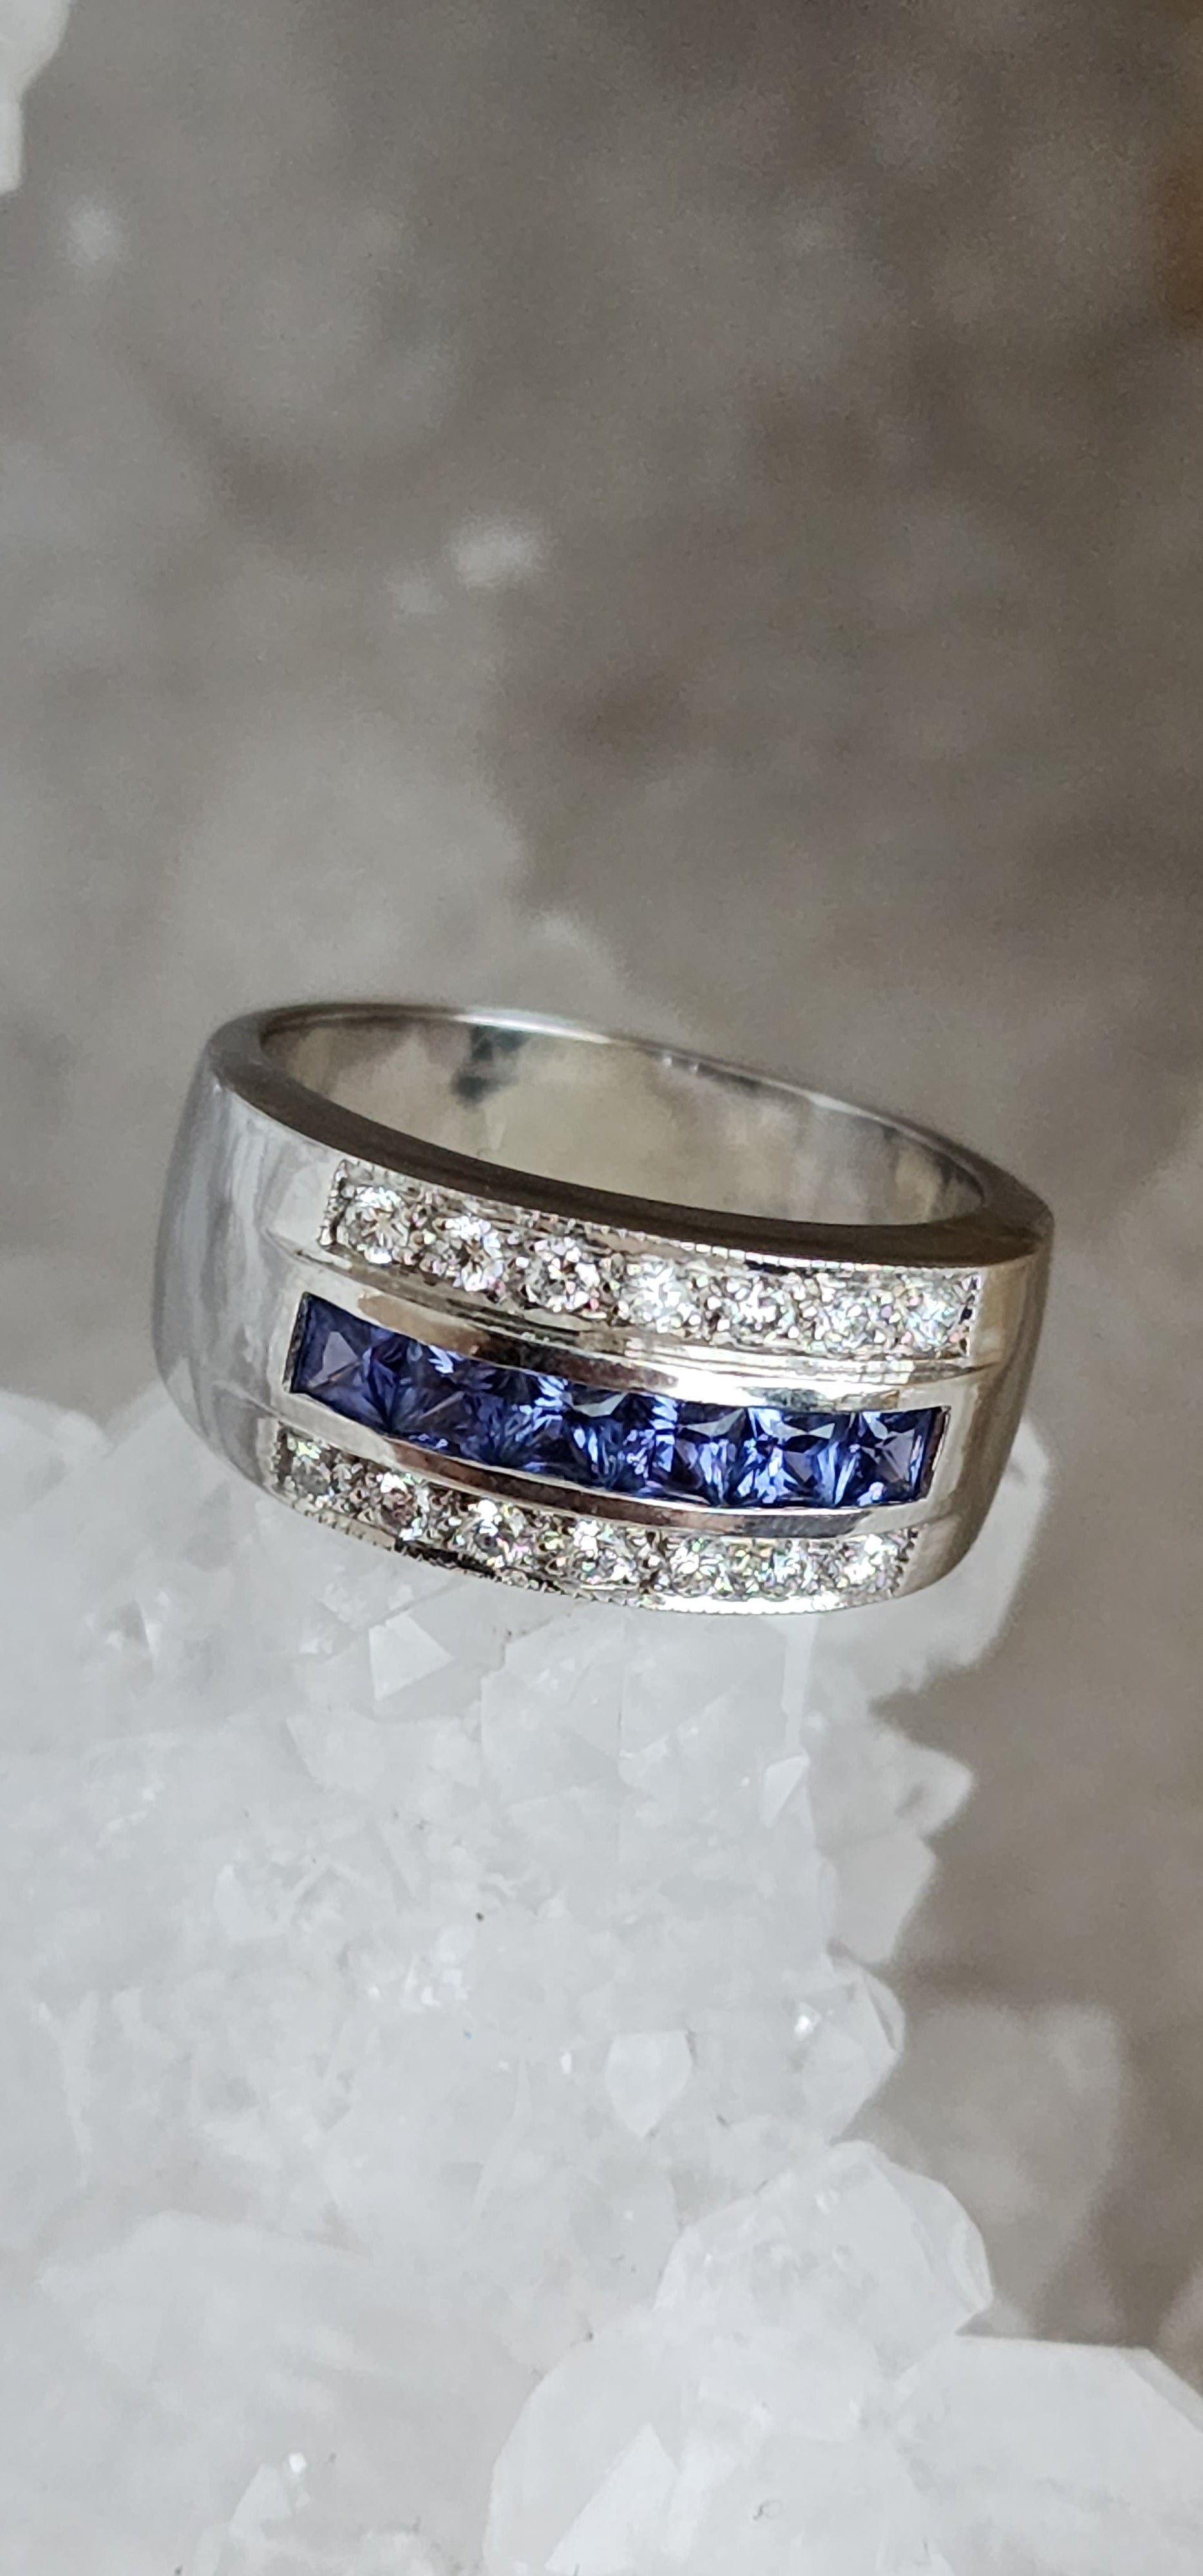 Ring - Yogo Sapphire and Diamond Ring